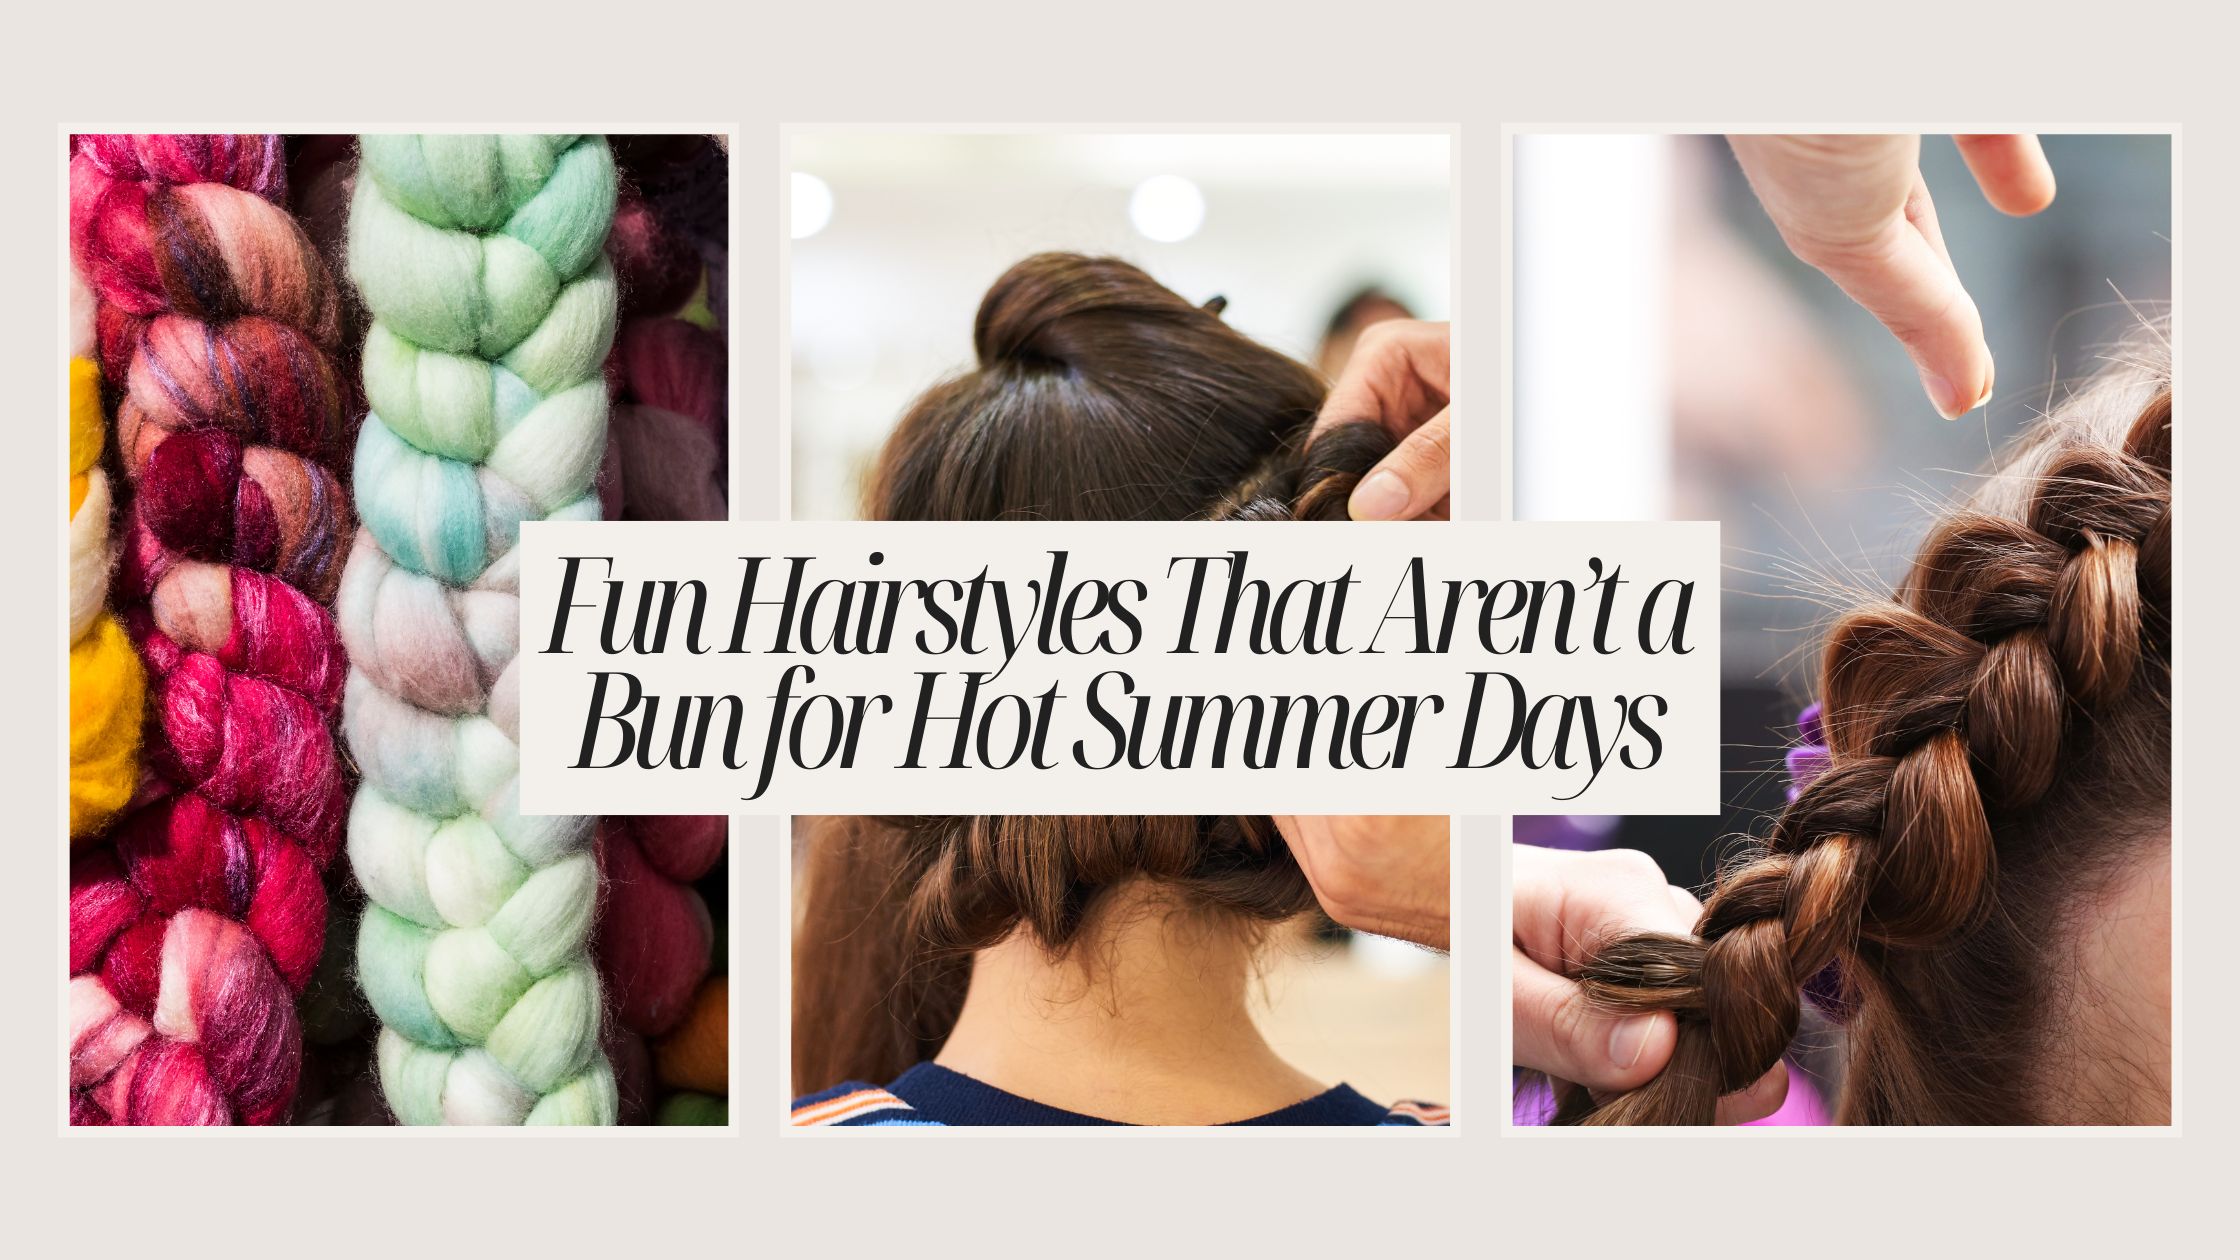 Fun Hairstyles That Aren’t a Bun for Hot Summer Days